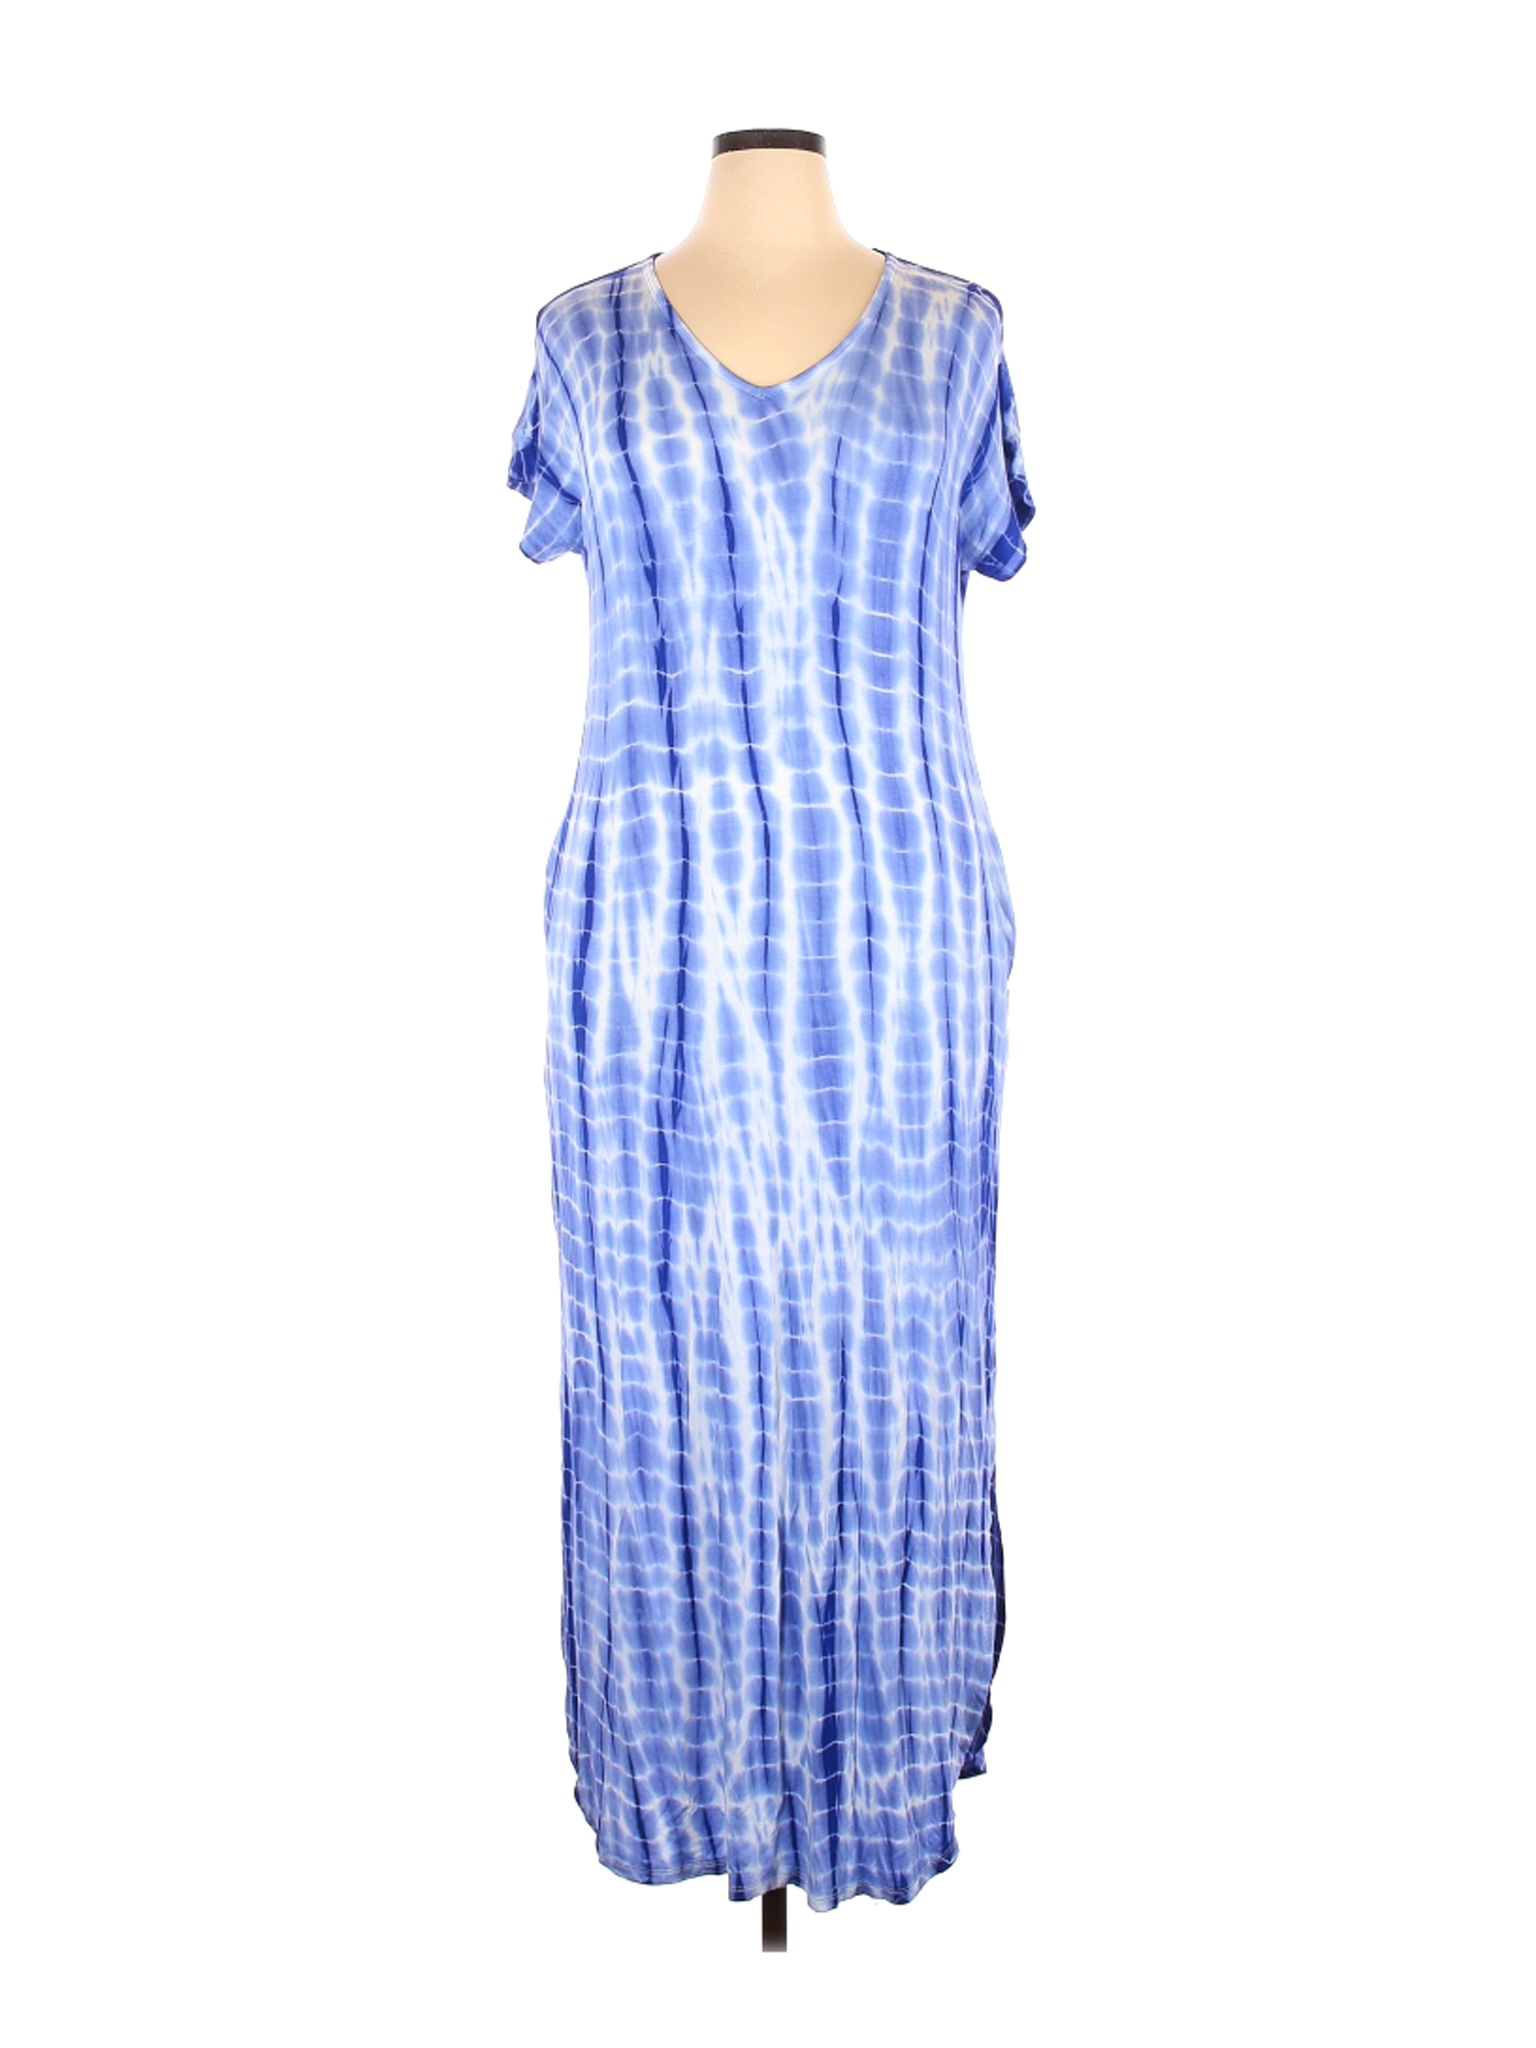 Philosophy Republic Clothing Women Blue Casual Dress XL | eBay